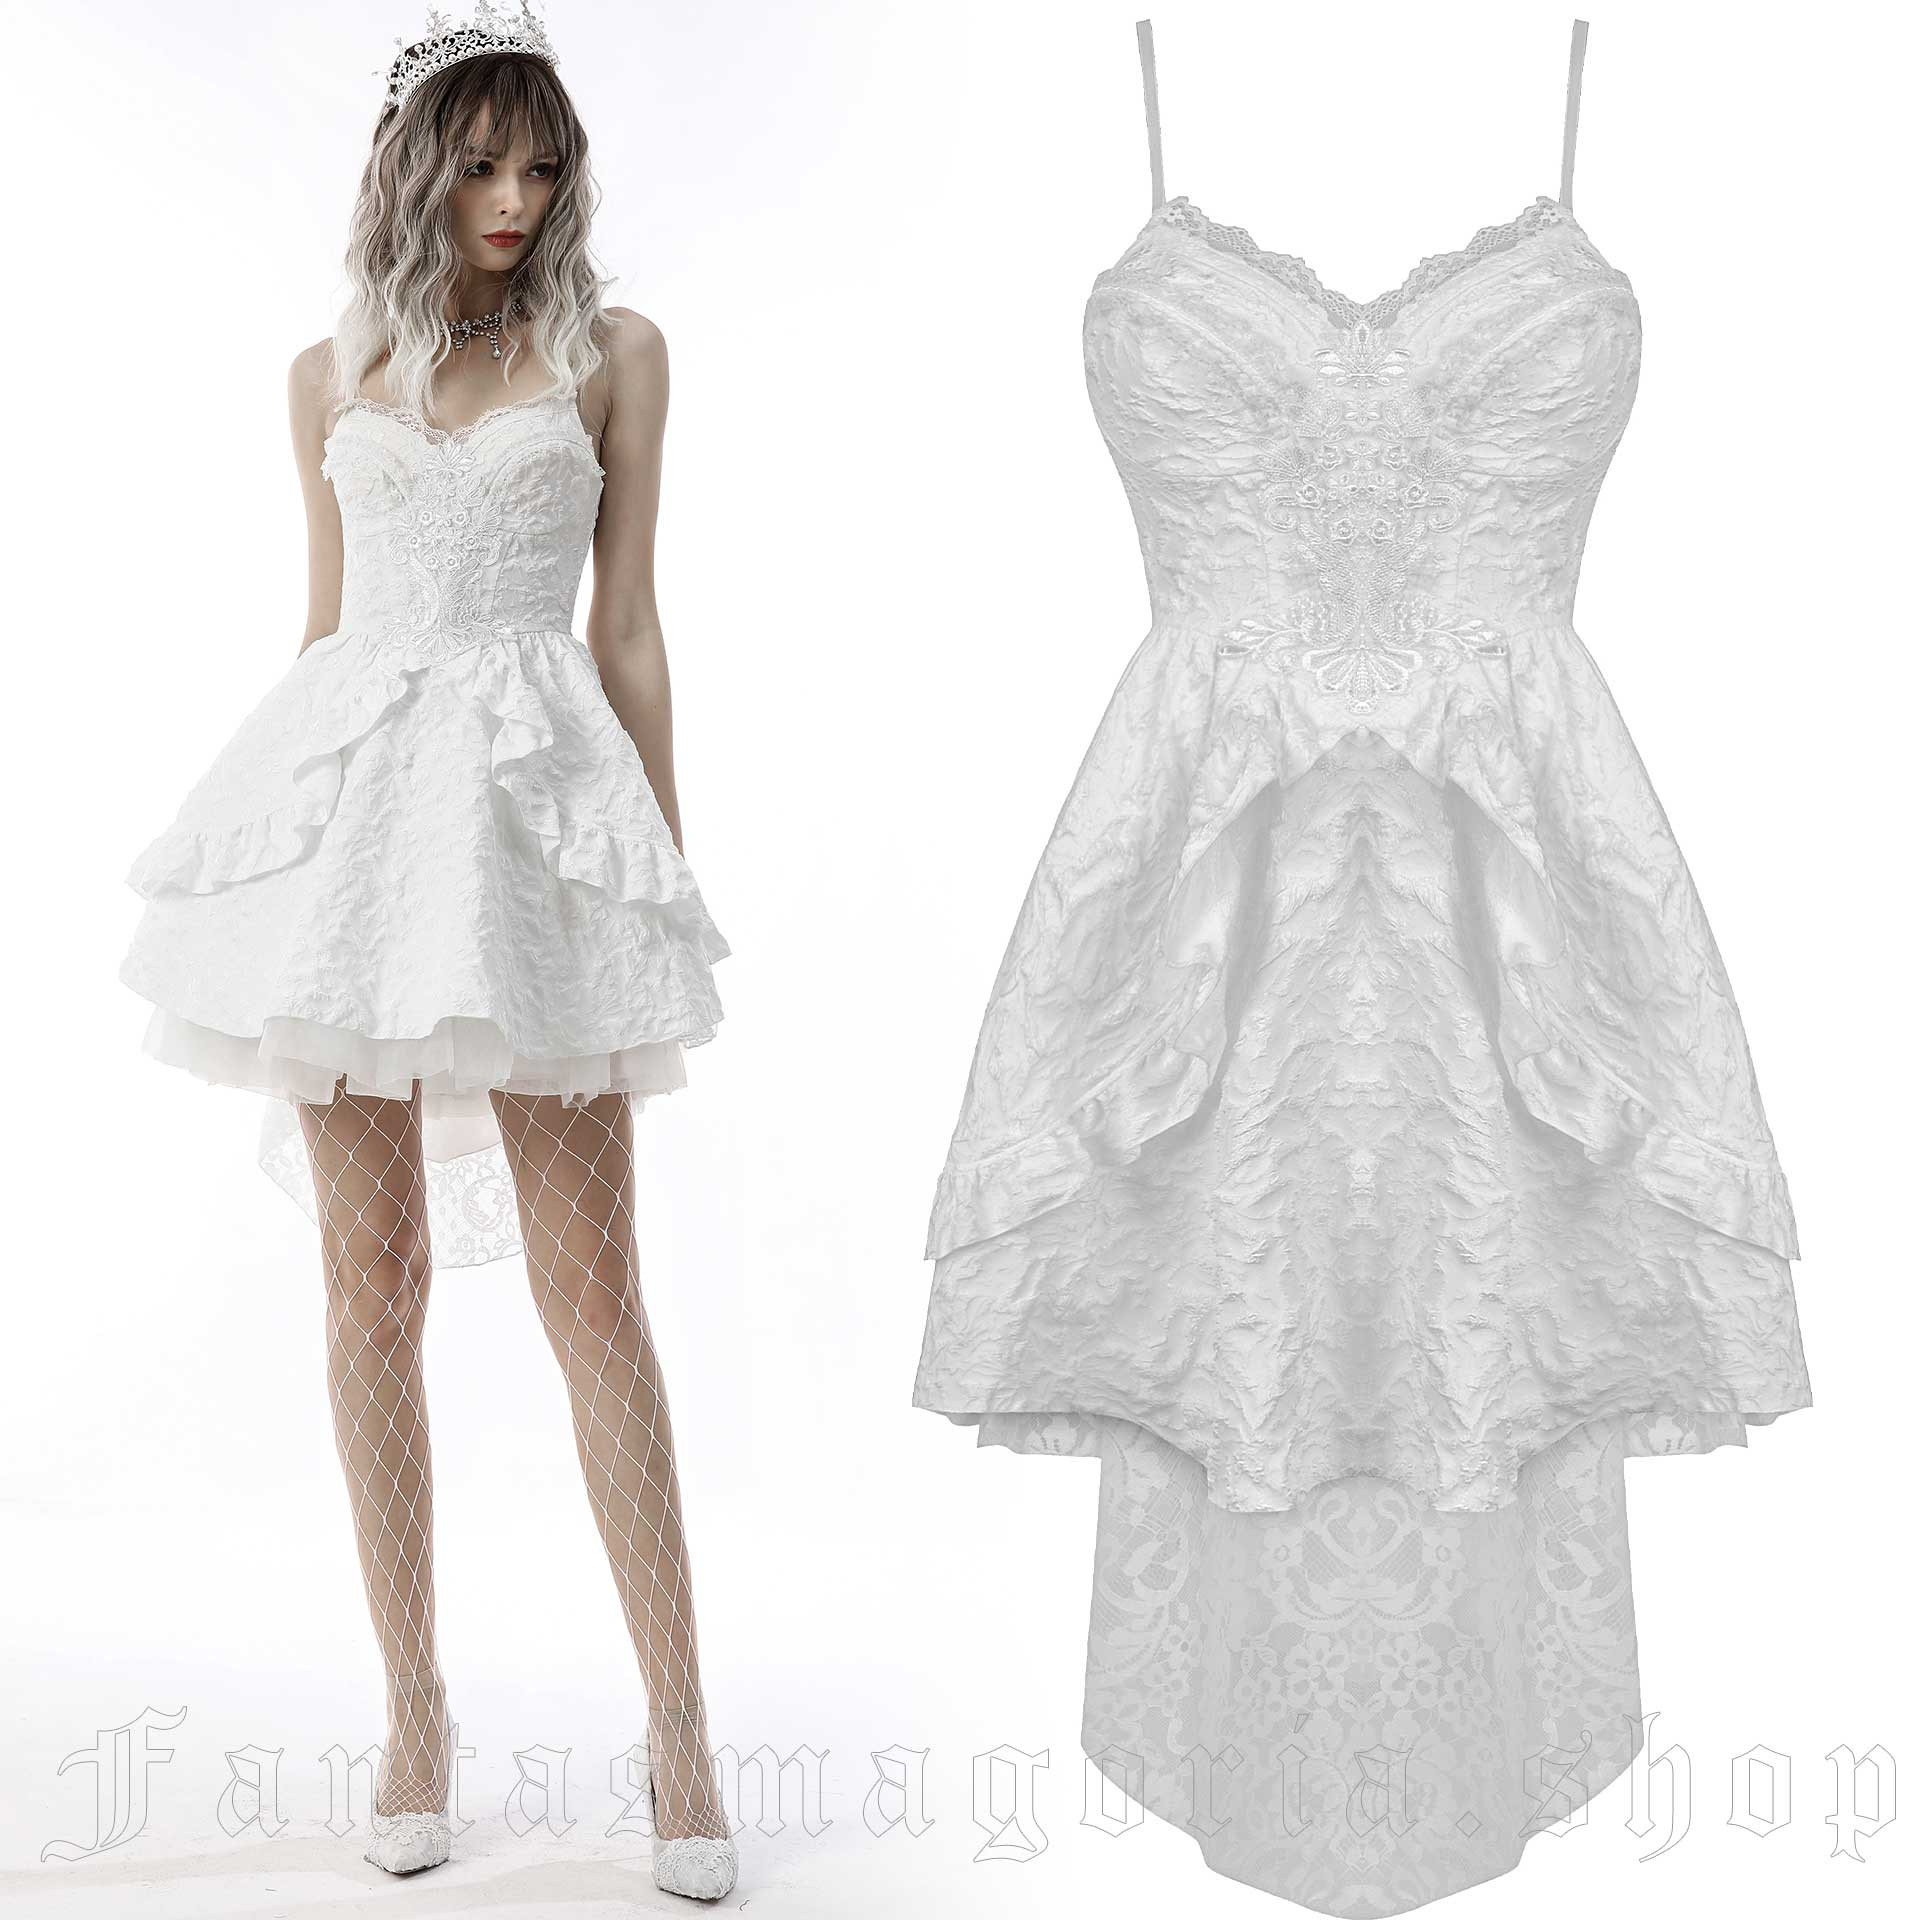 White Swan Dress - Dark in Love - DW635 1